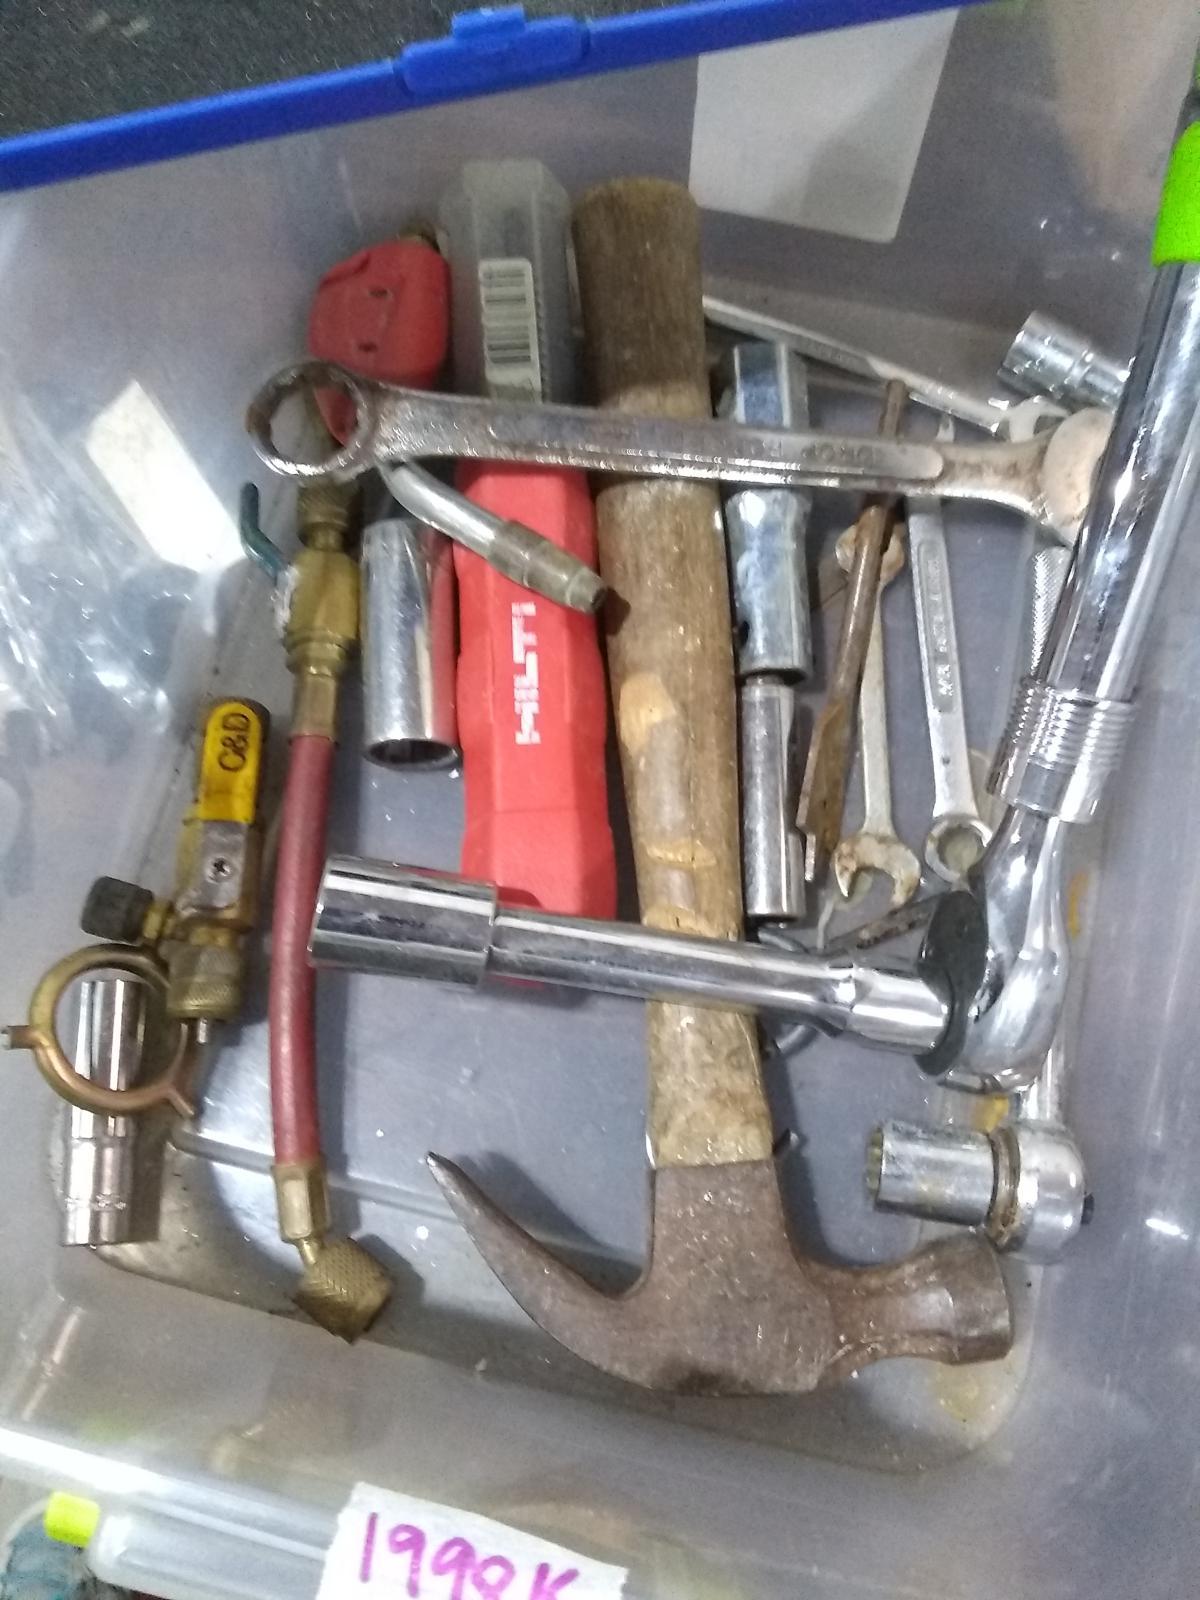 Bl- Tools - Sockets, Driver, Hammer